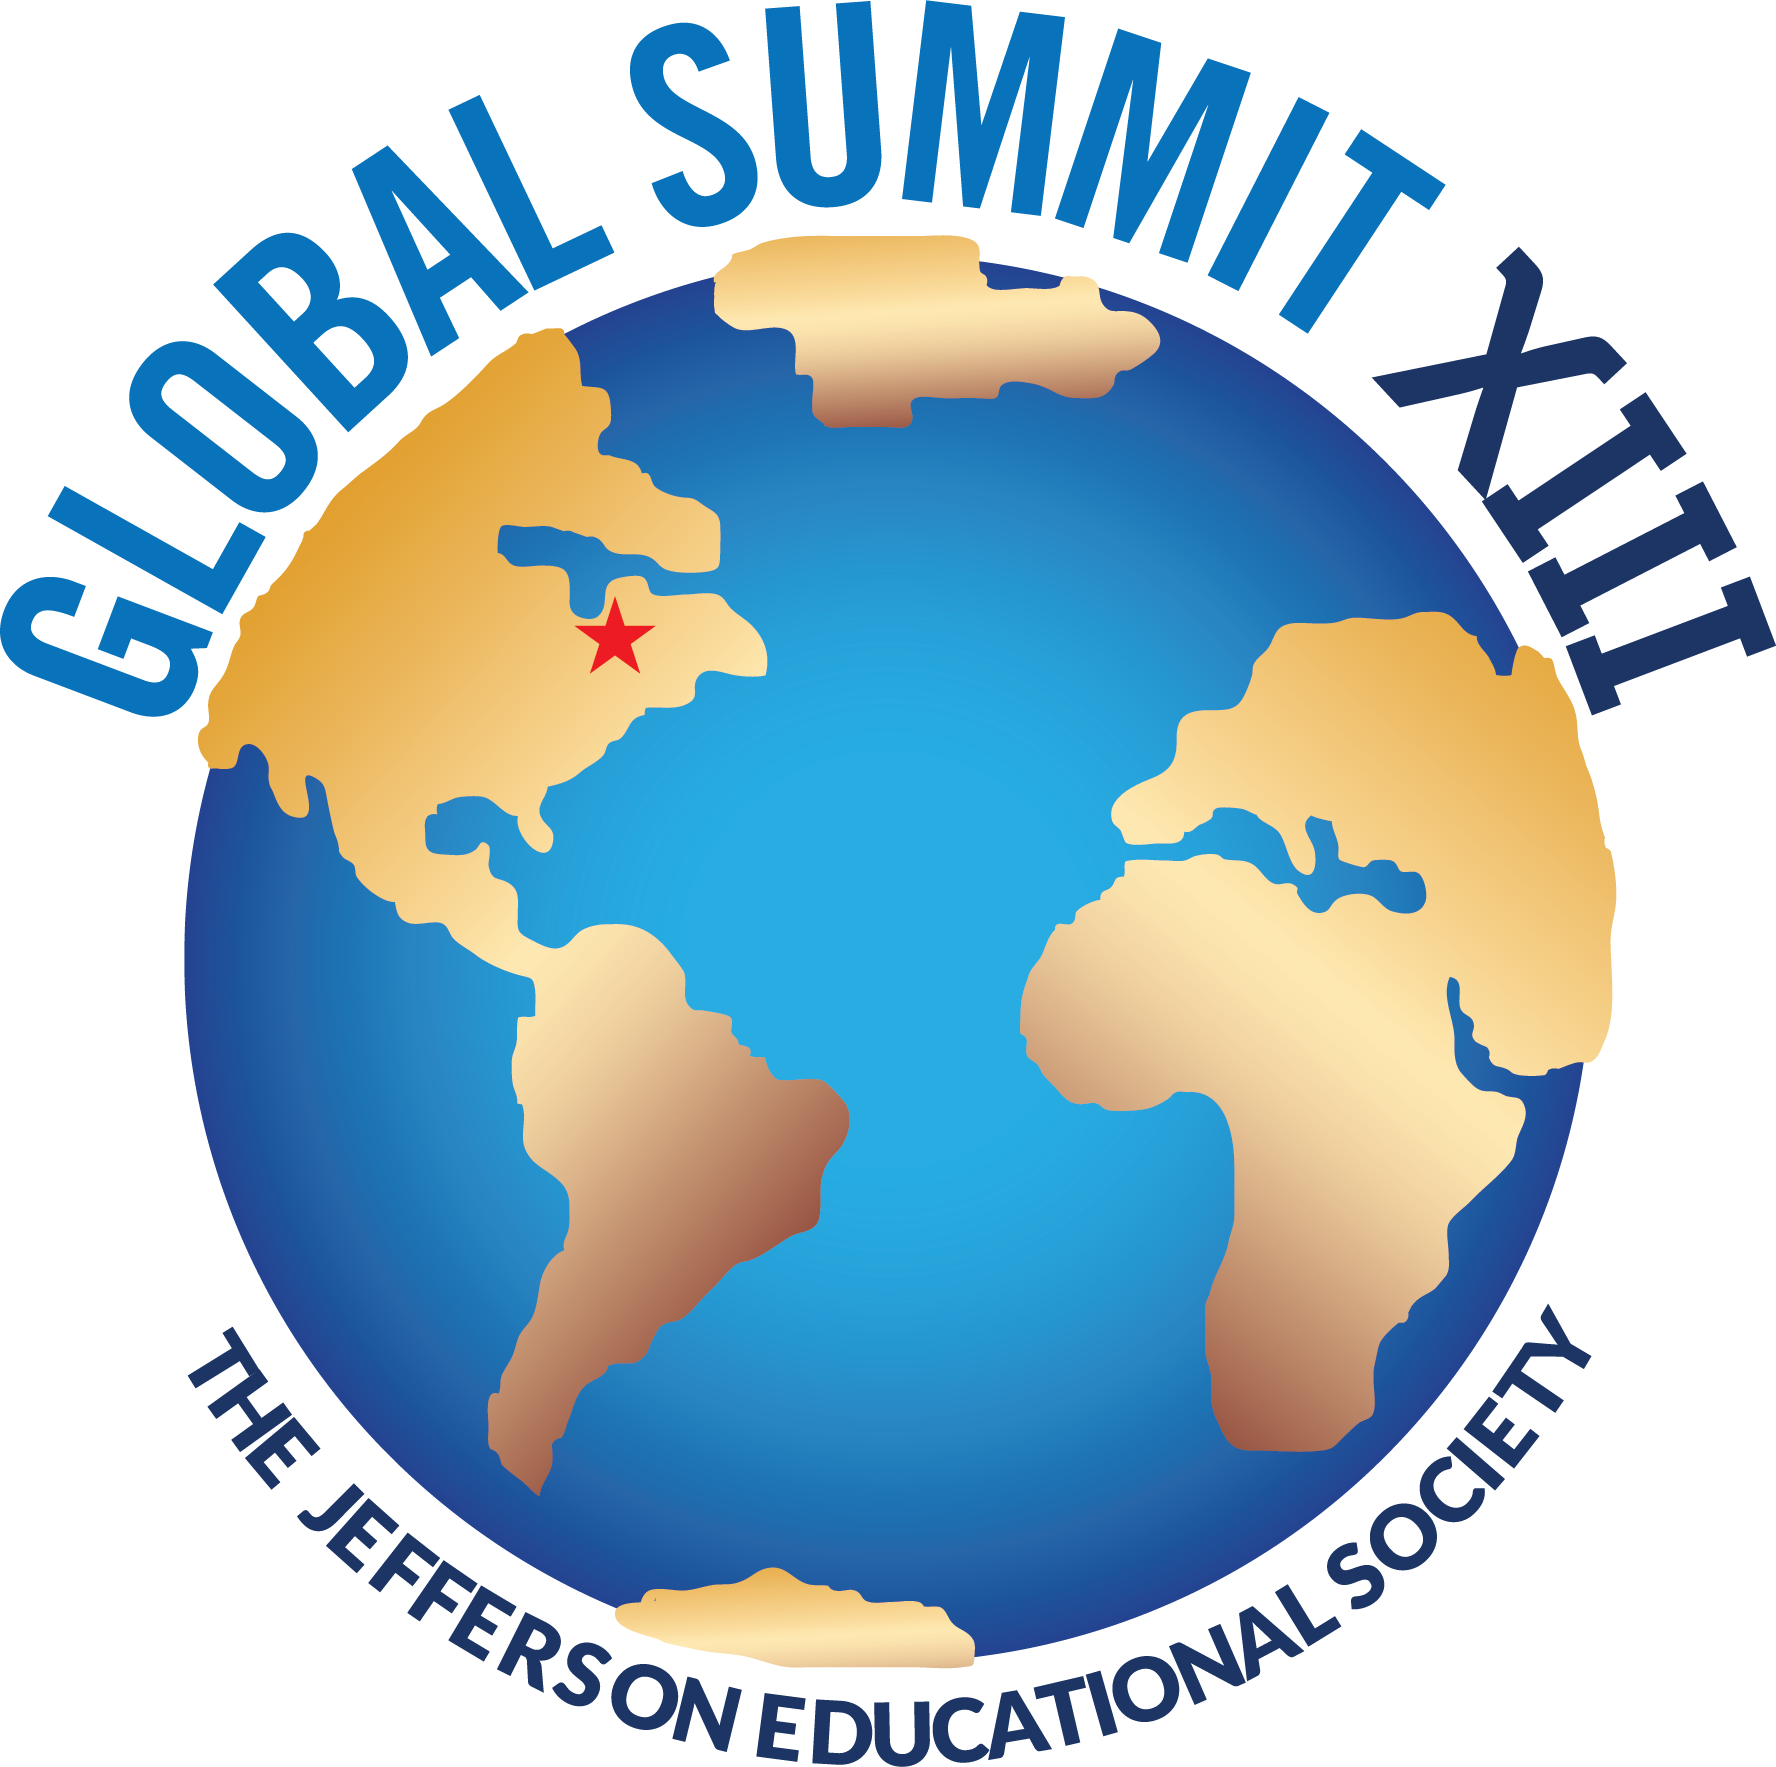 Global Summit XIII Retrospective